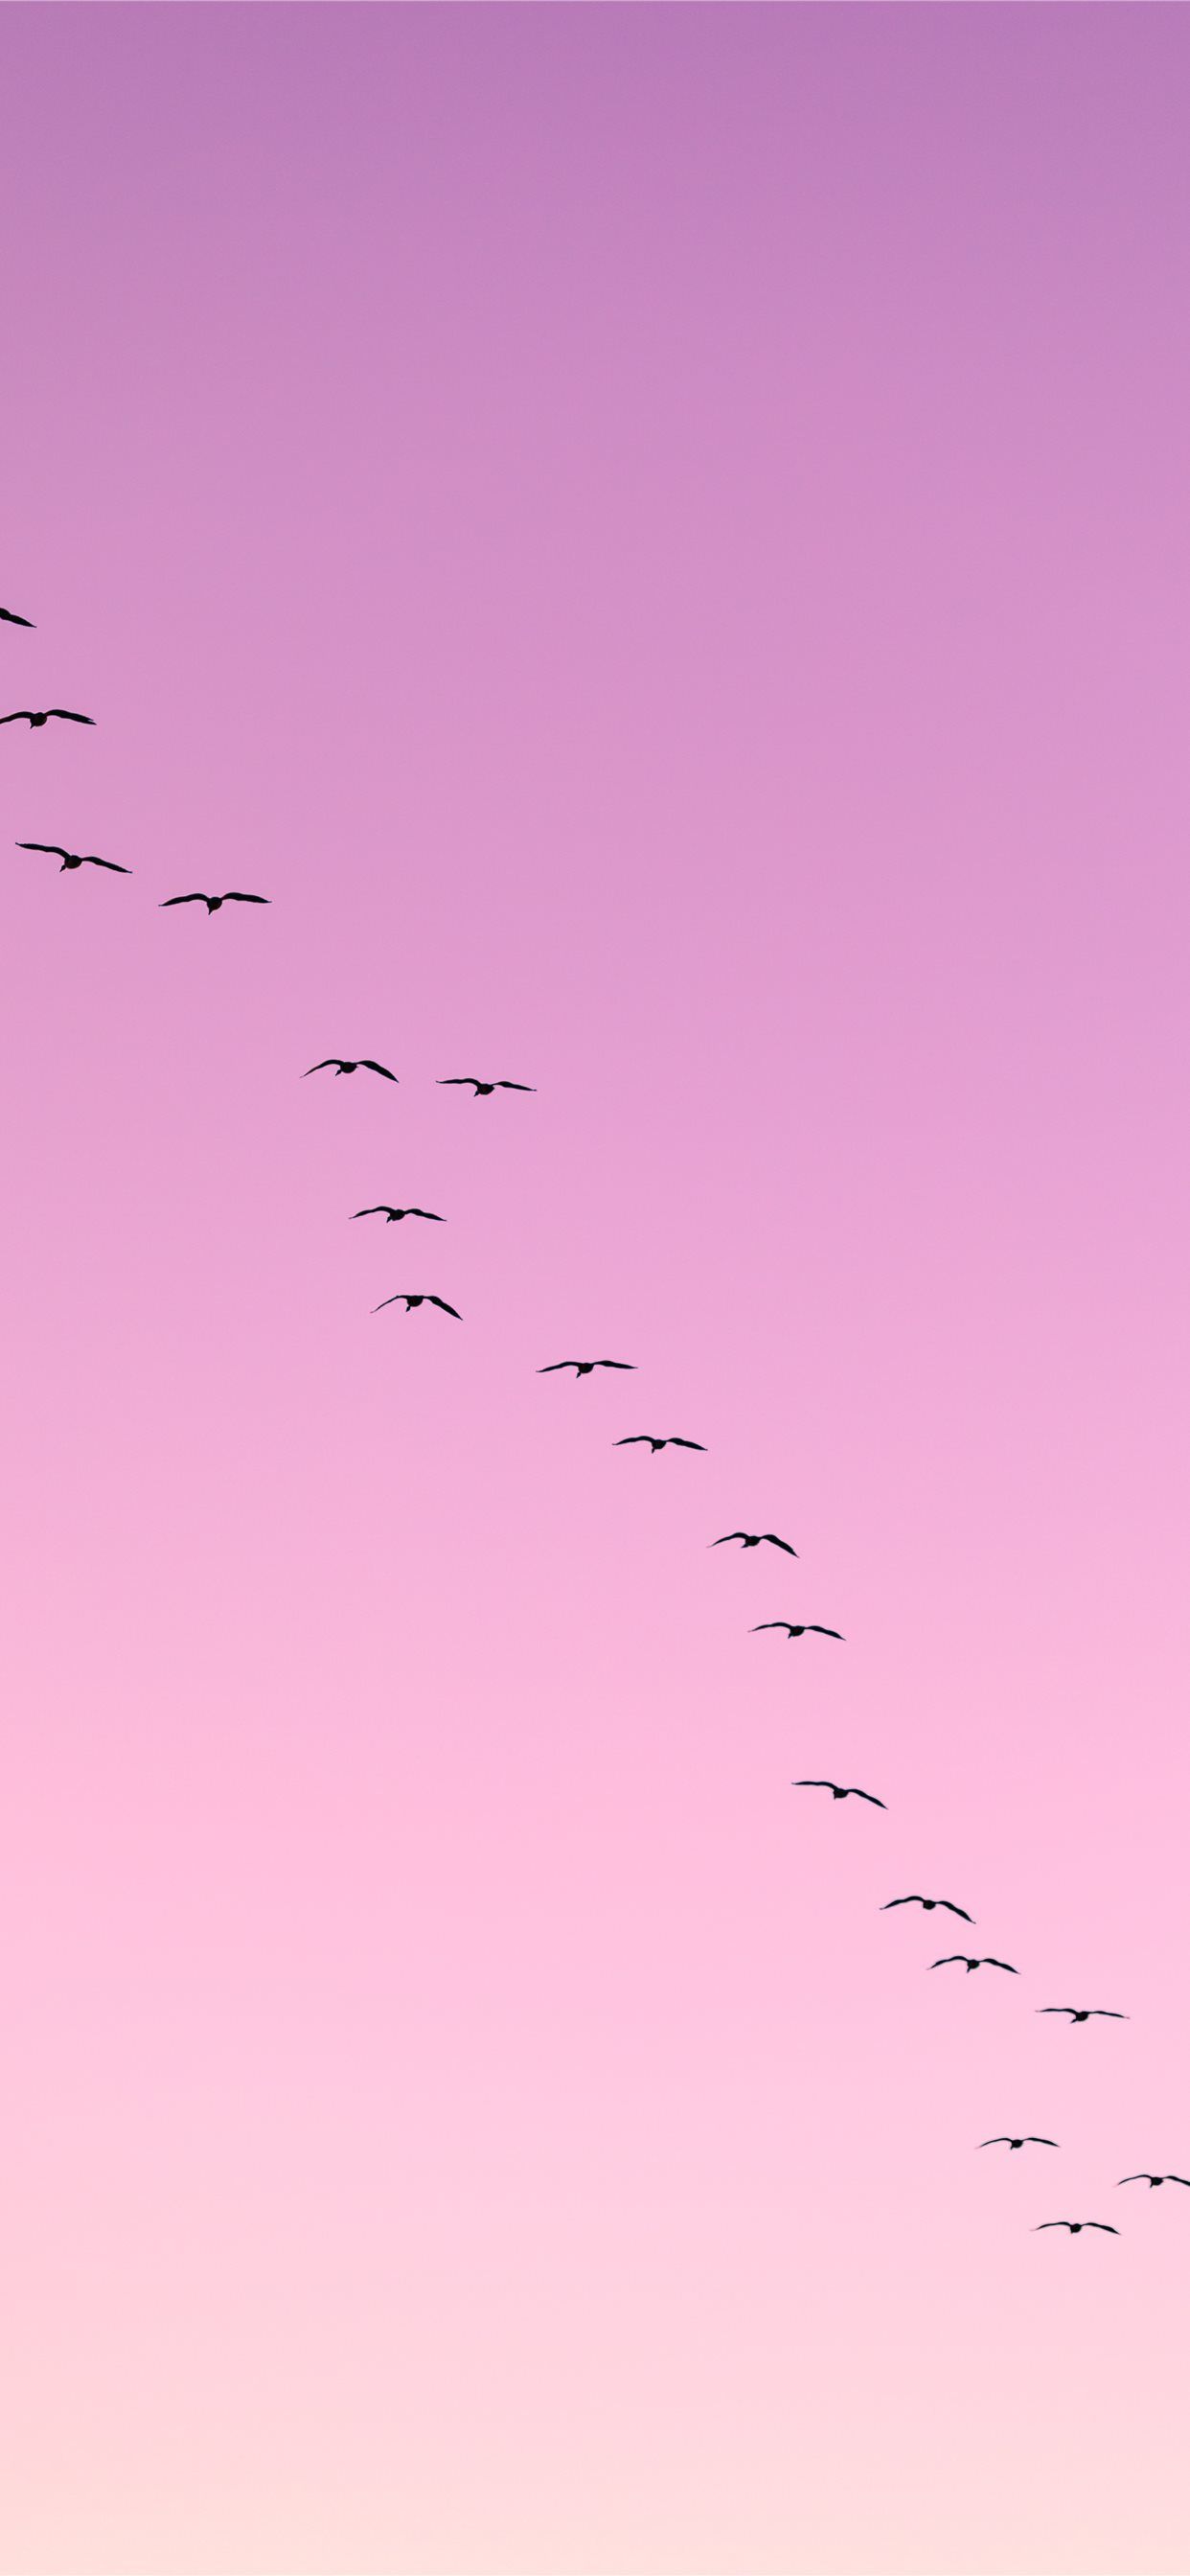 flock of birds flying iPhone 11 Wallpaper Free Download